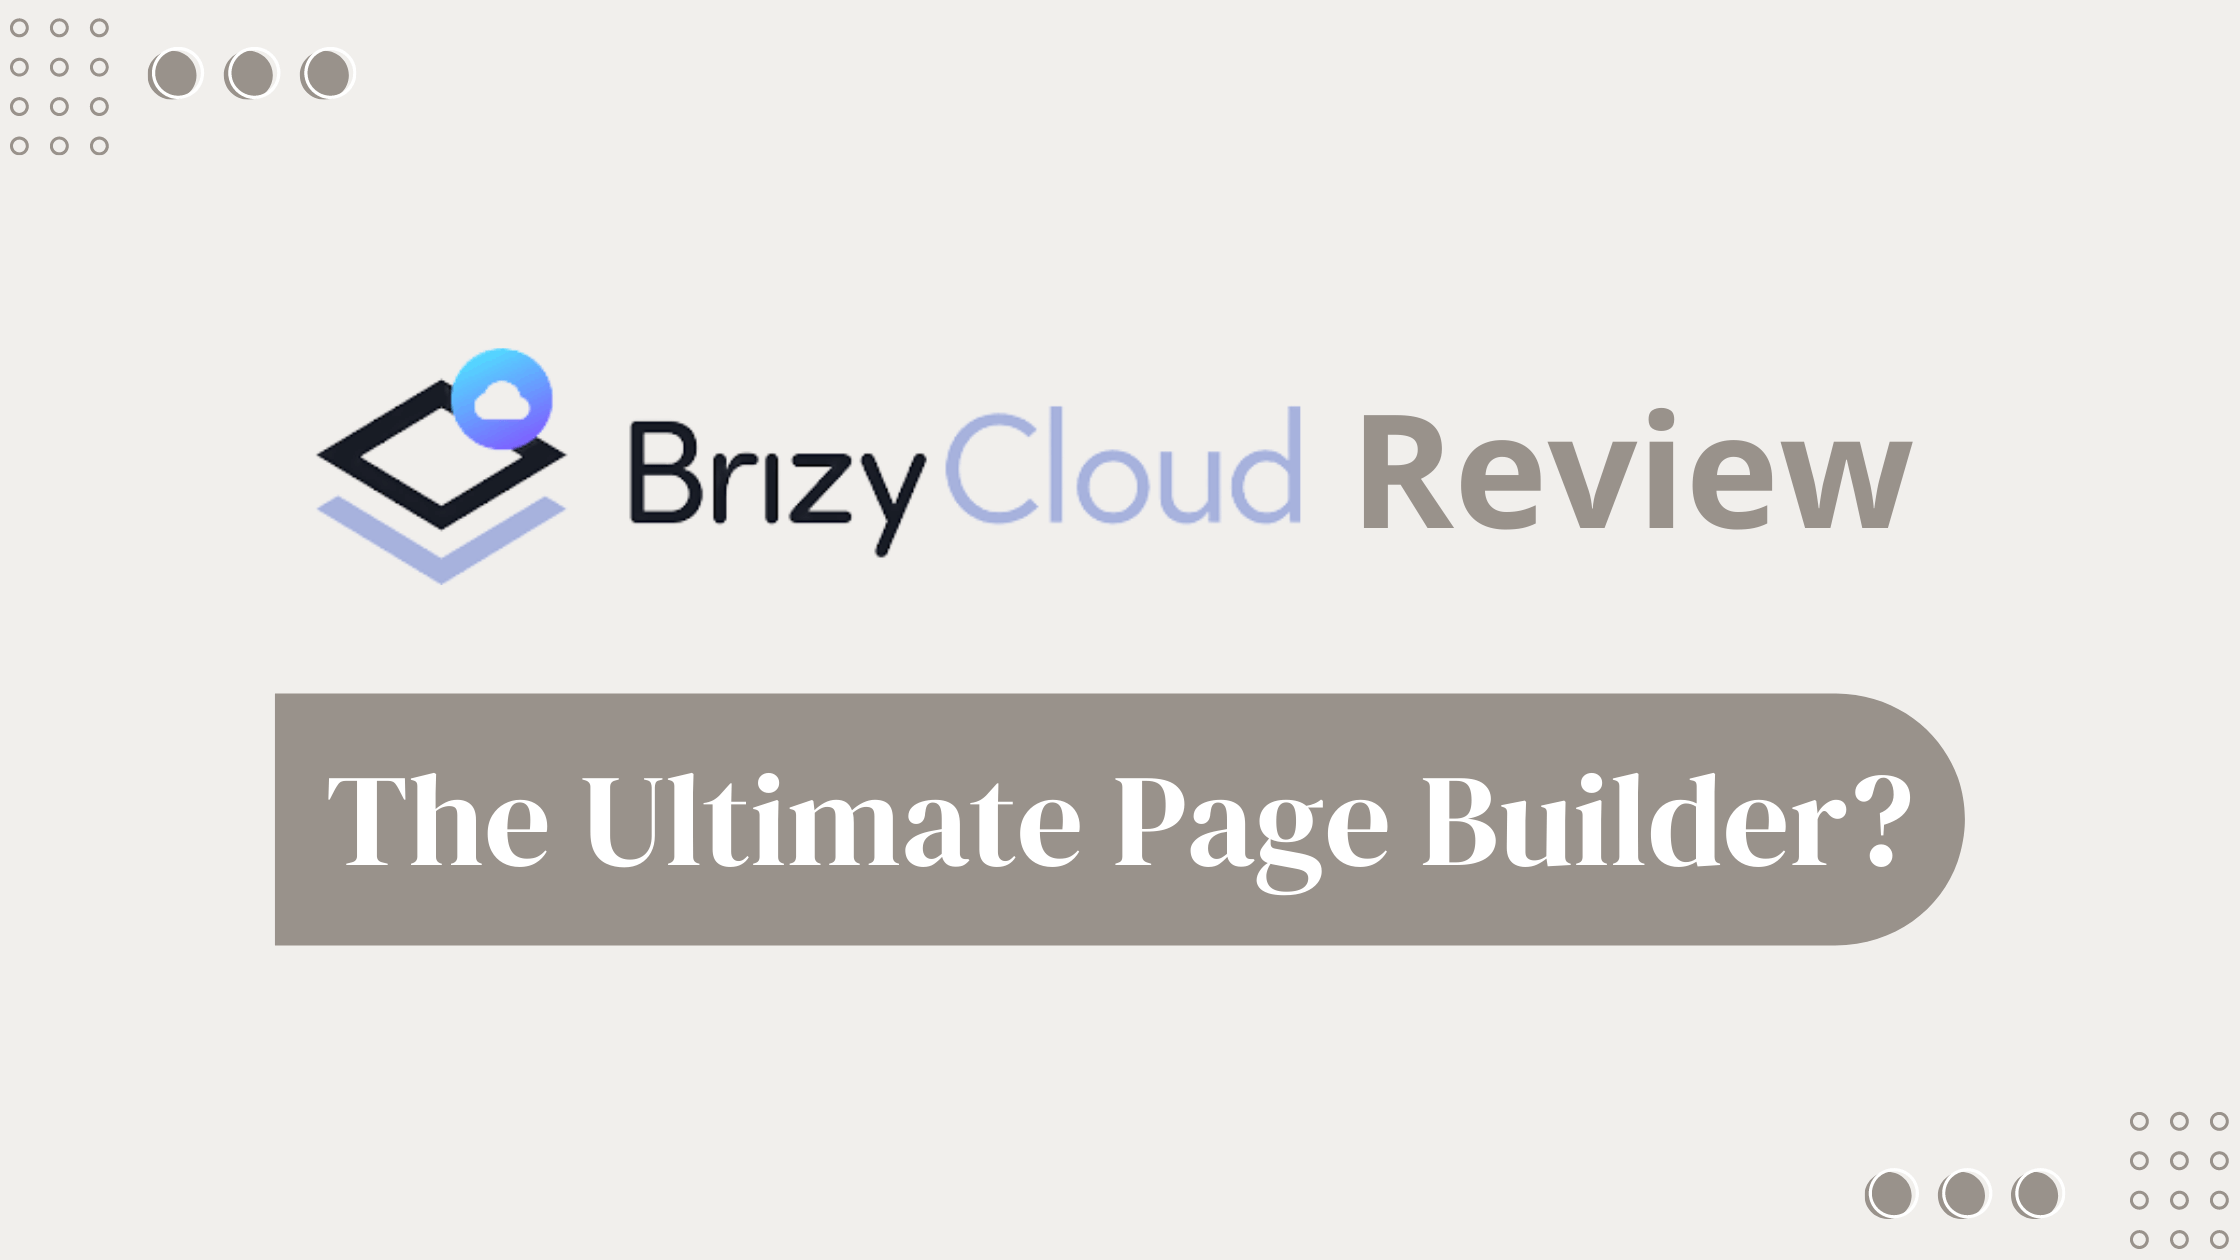 brizy cloud review - landing page builder